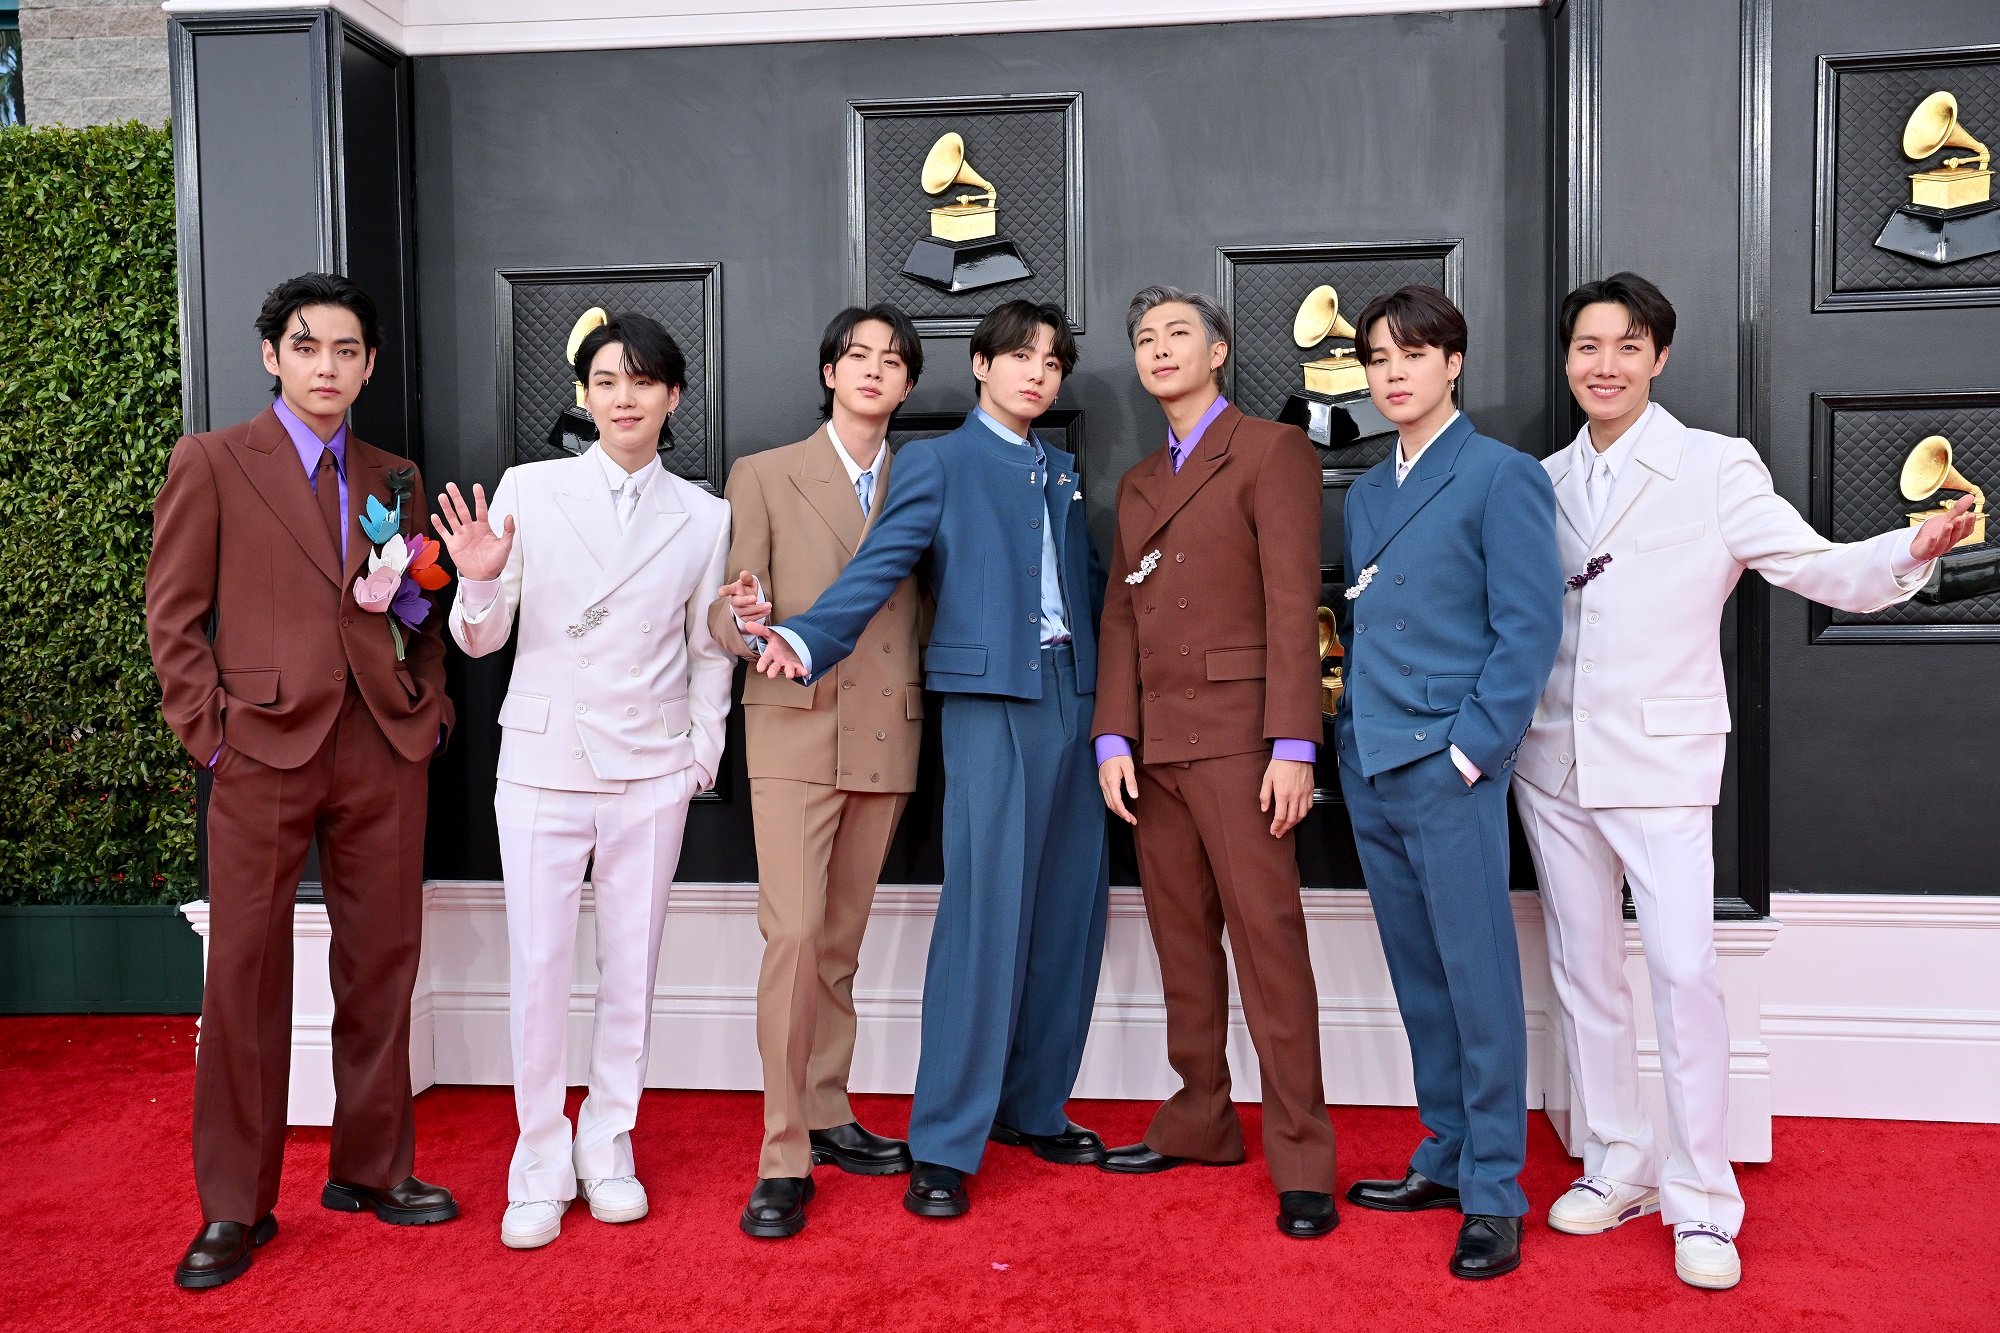 V, Suga, Jin, Jungkook, RM, Jimin, and J-Hope of BTS pose on the red carpet at the 2022 Grammy Awards